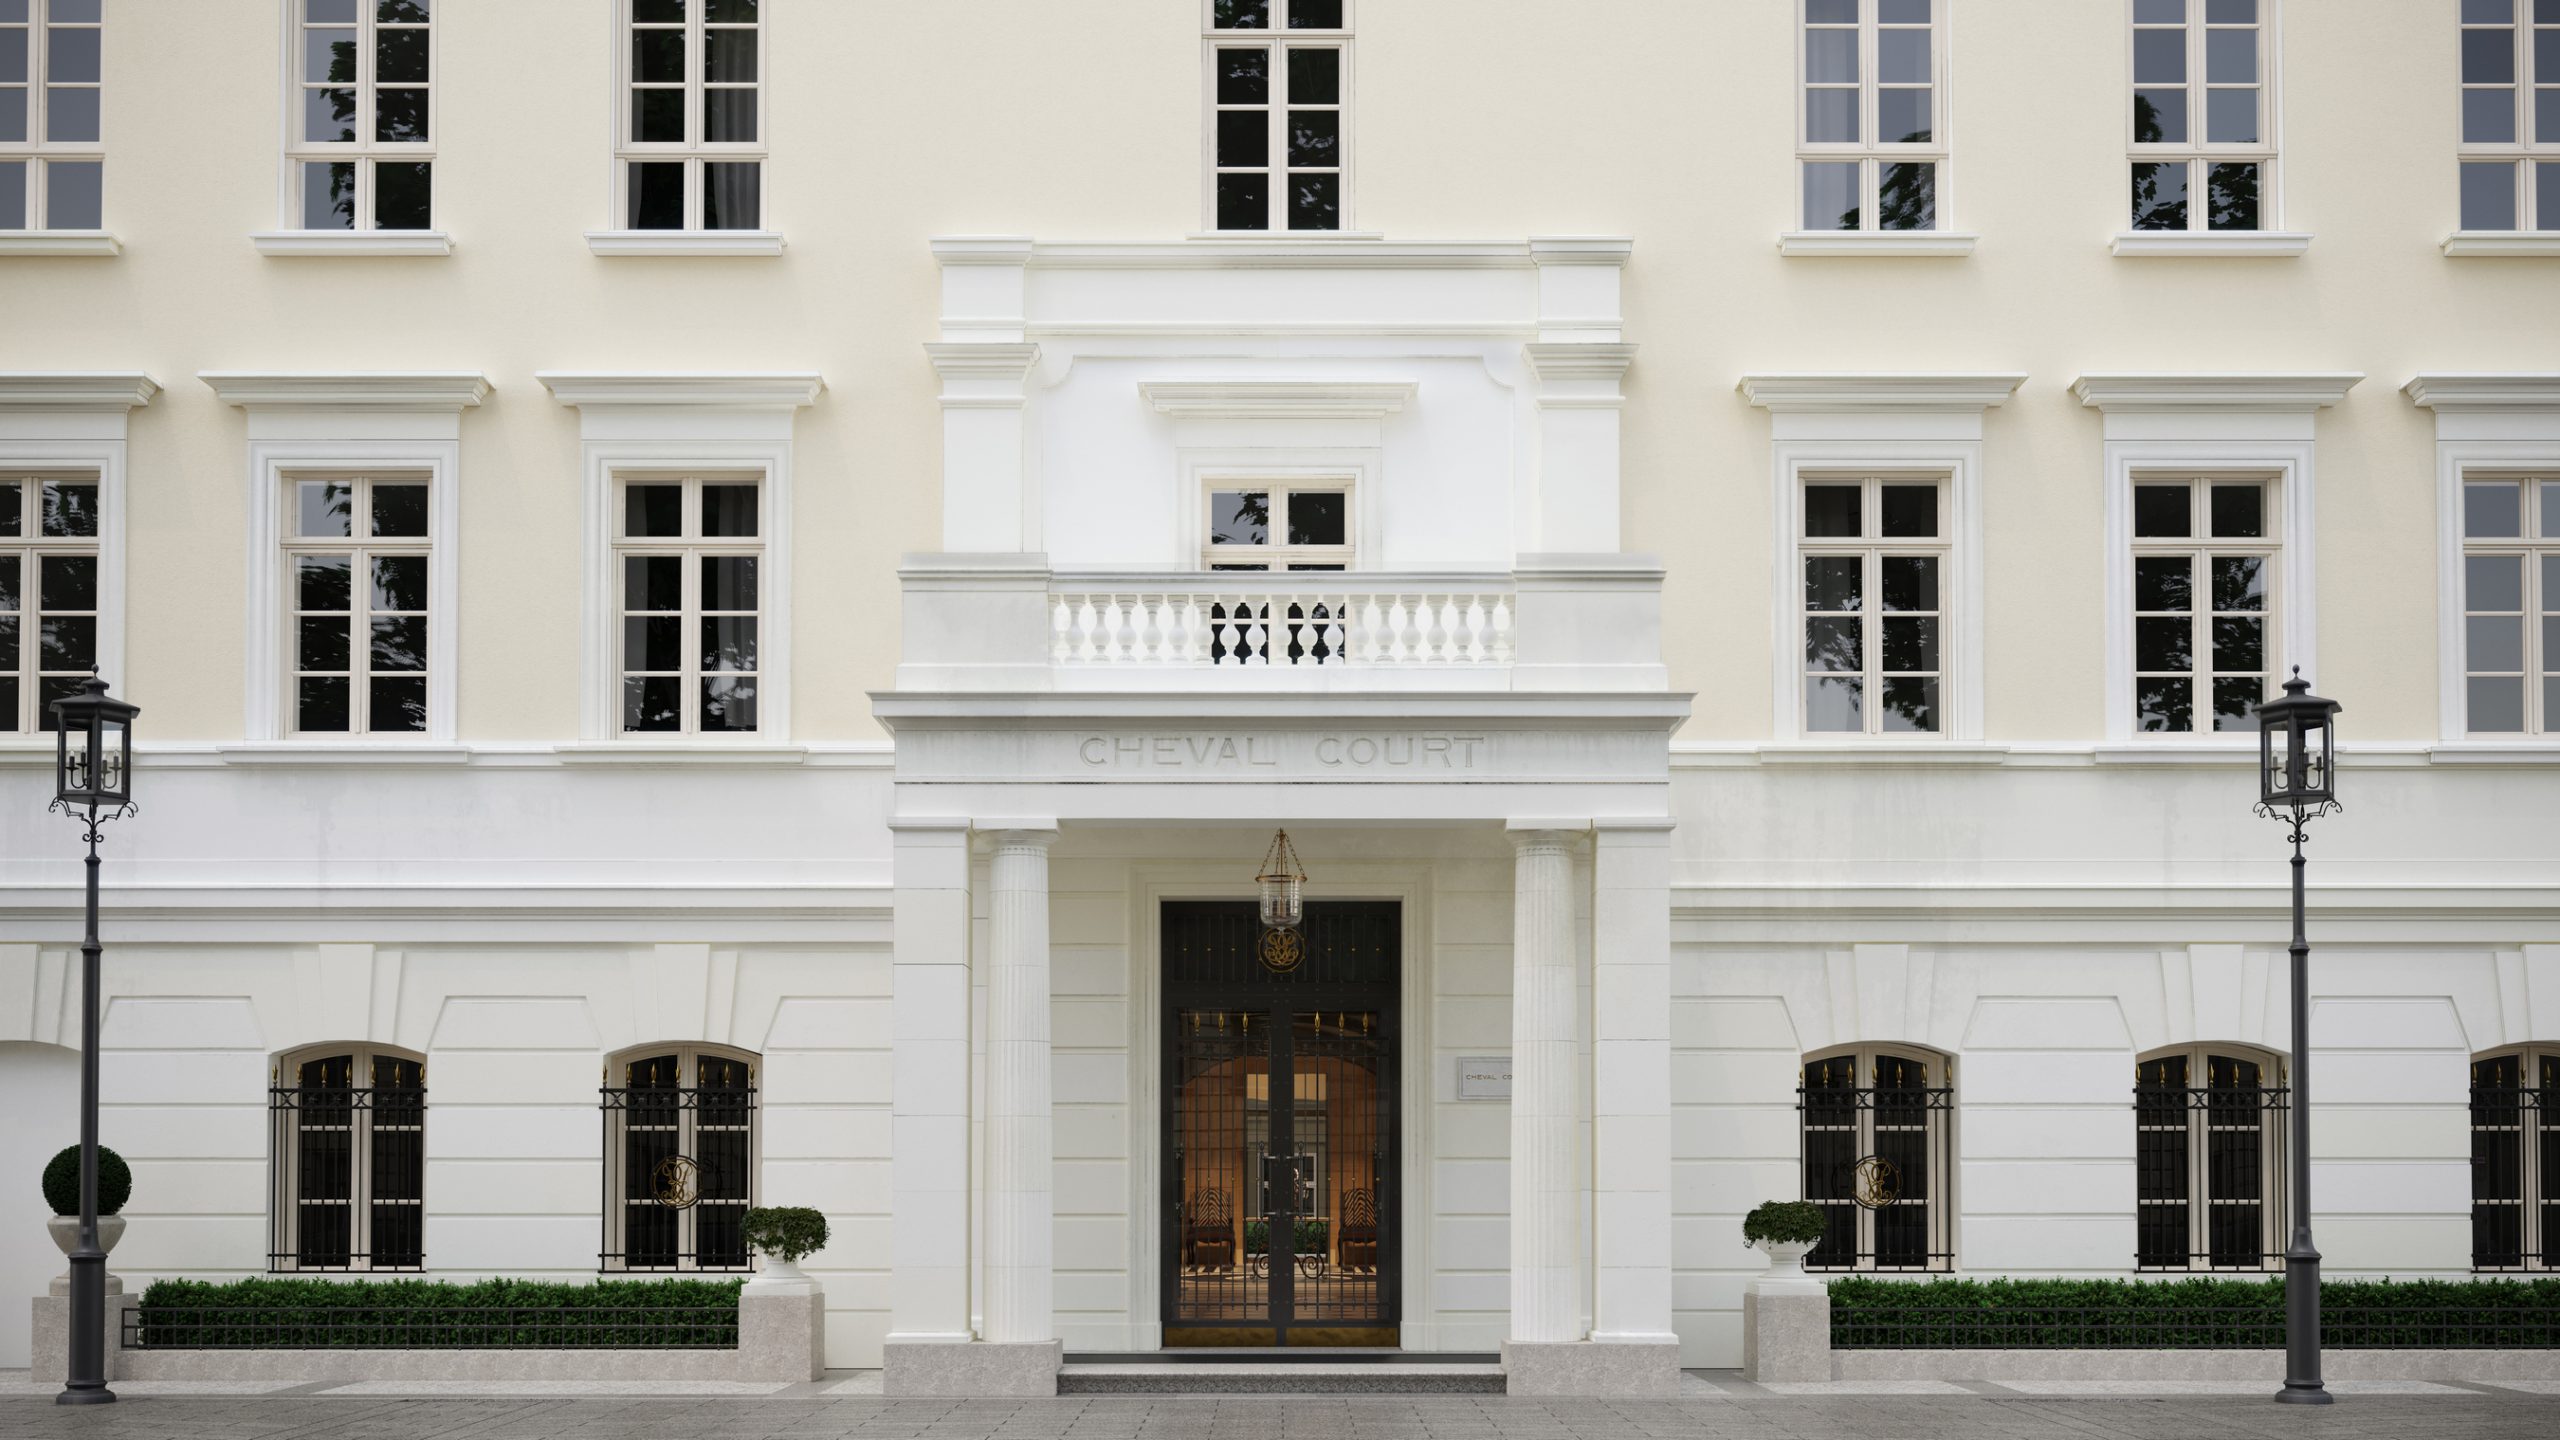 Cheval Court Exteriors For Ralph Lauren Home, London - , 4